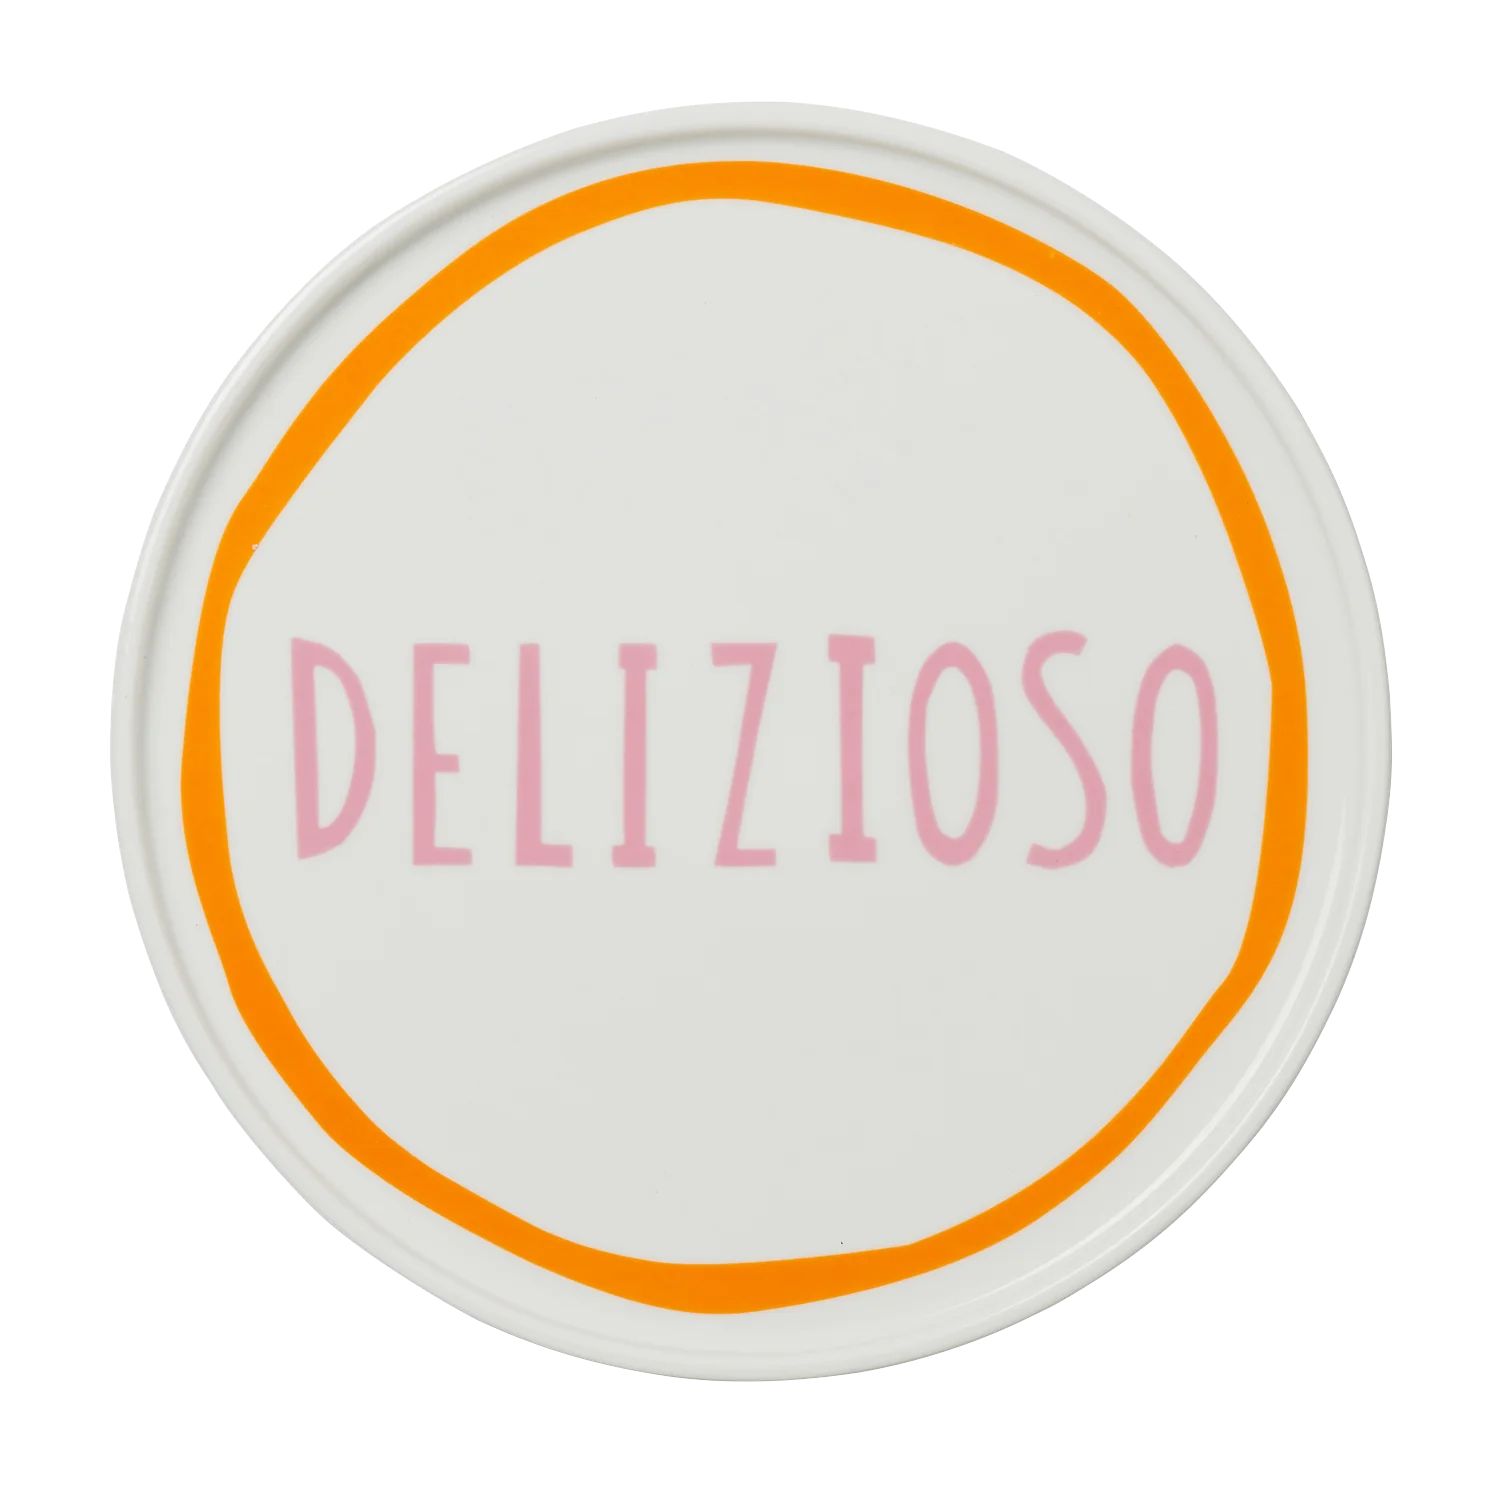 Delizioso | In the Roundhouse